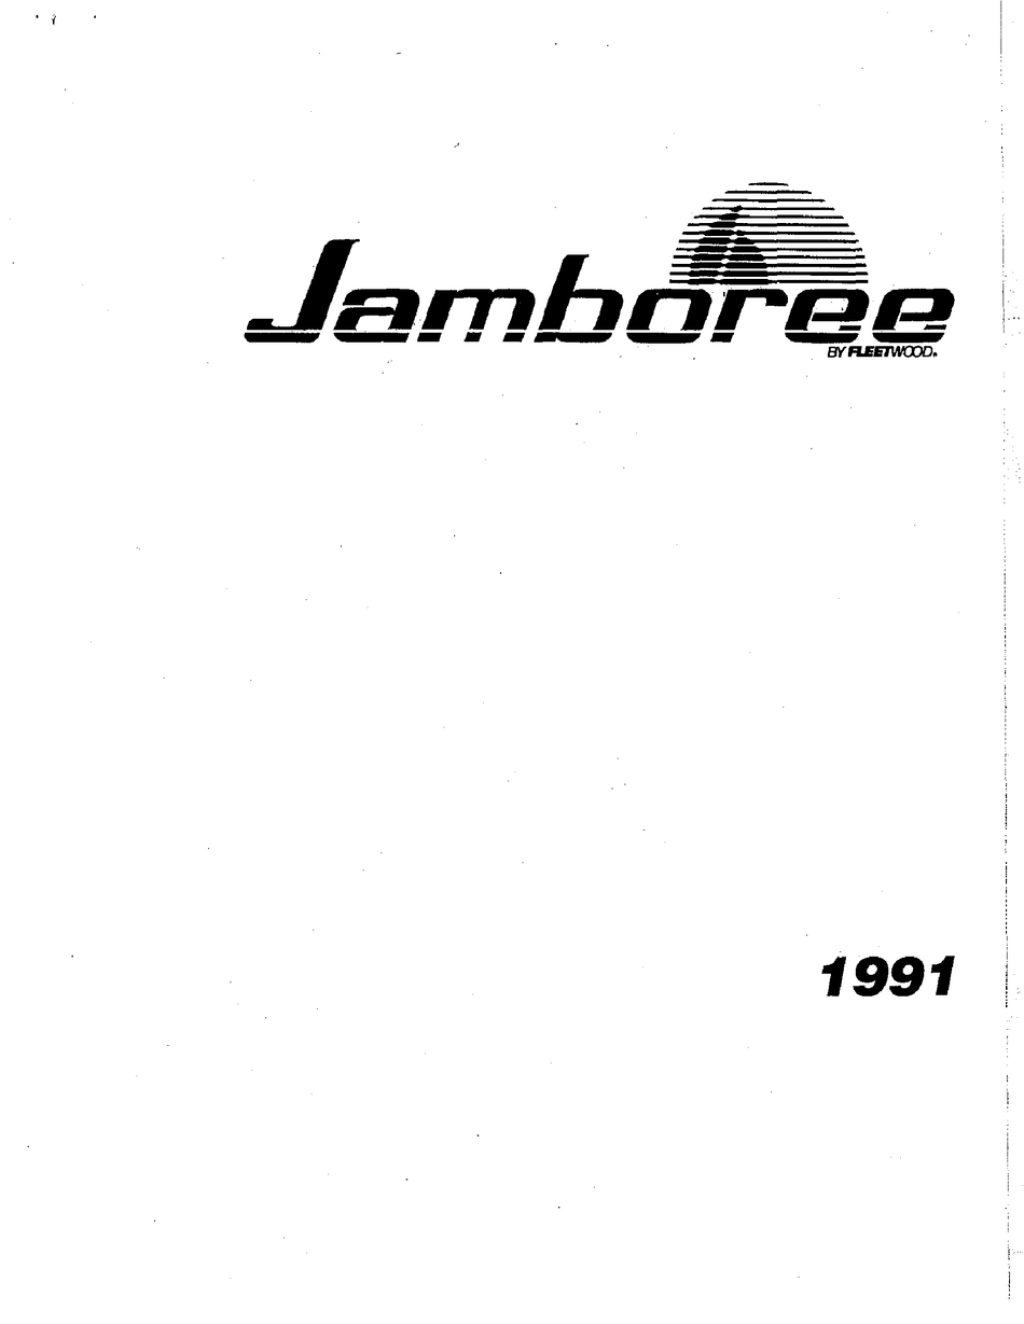 Picture of: FLEETWOOD JAMBOREE  MANUAL Pdf Download  ManualsLib